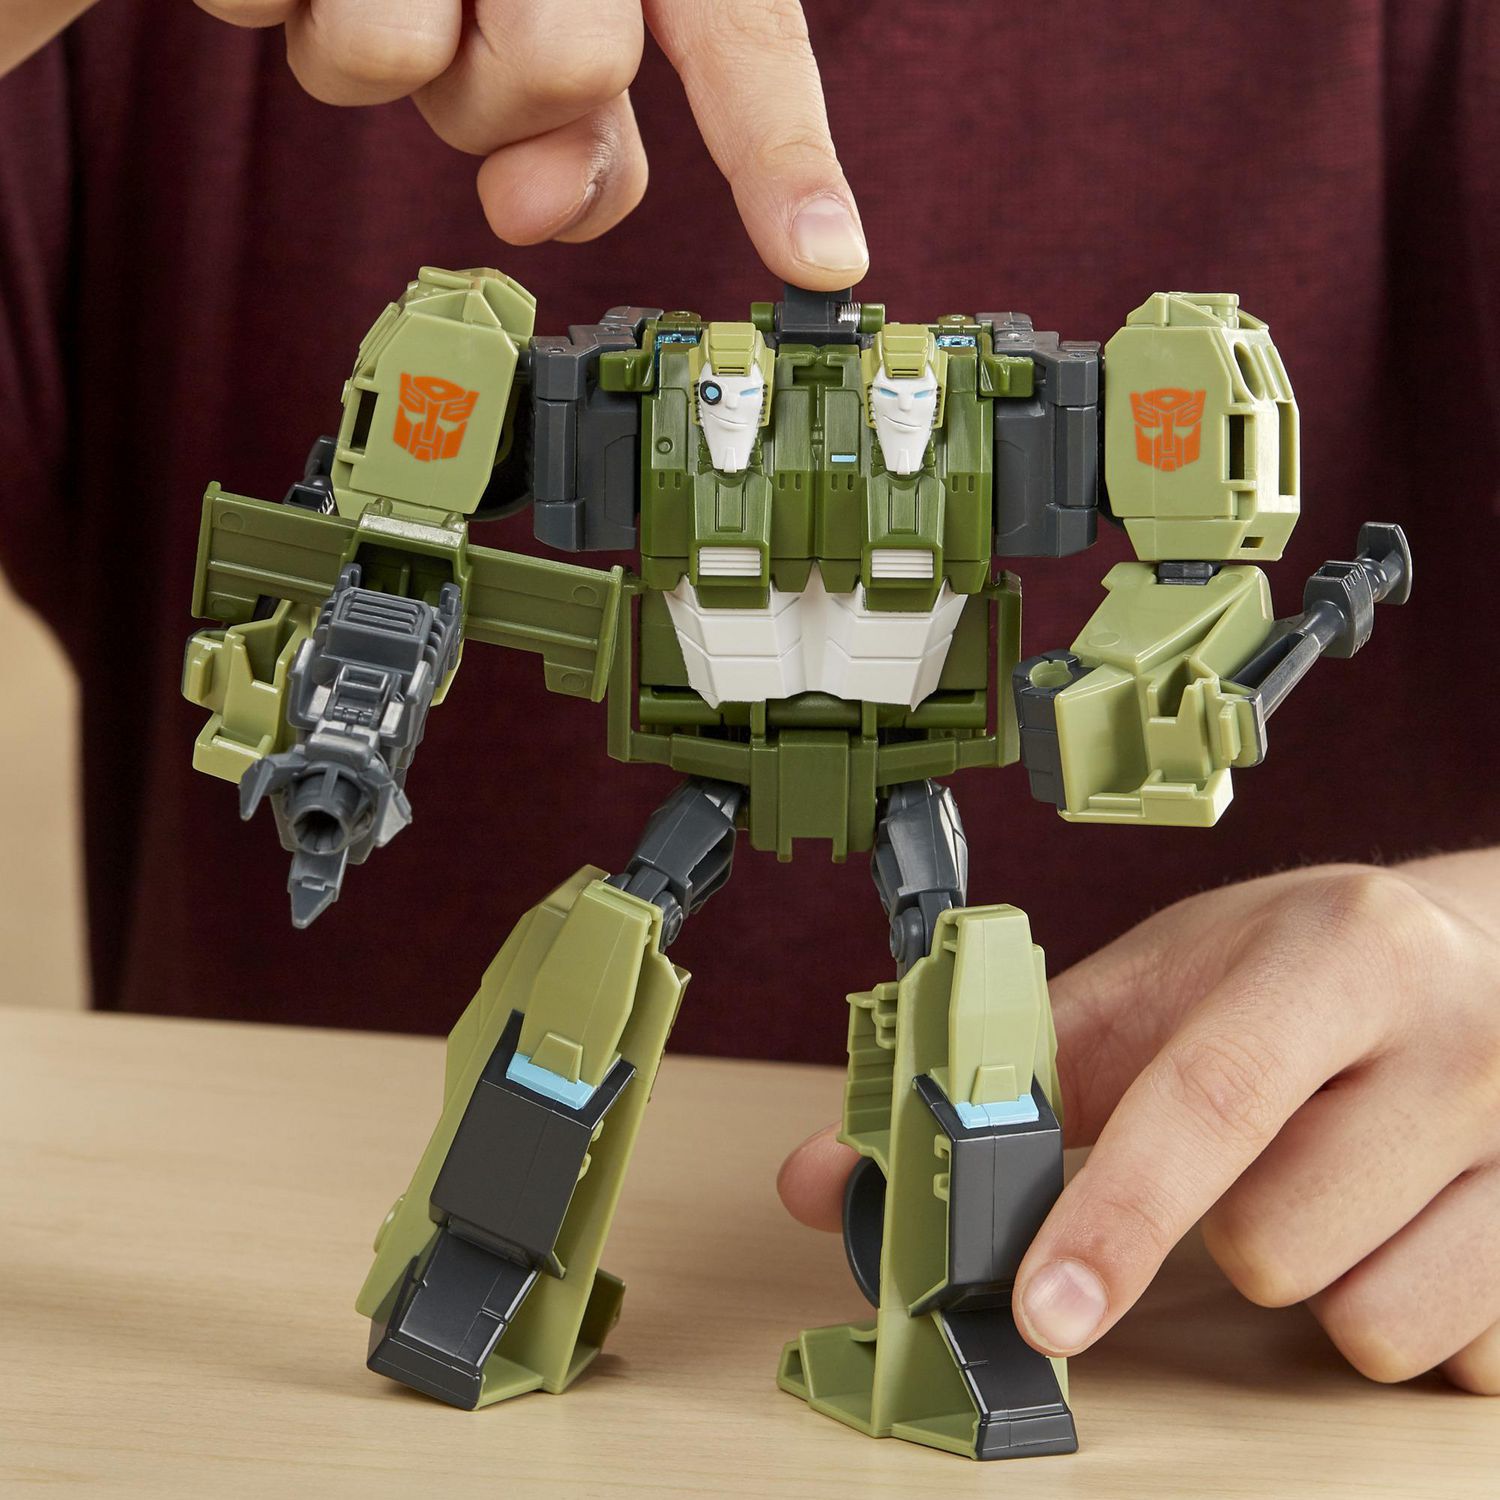 Transformers Toys Cyberverse Ultra Class RACK'N'RUIN Action Figure 